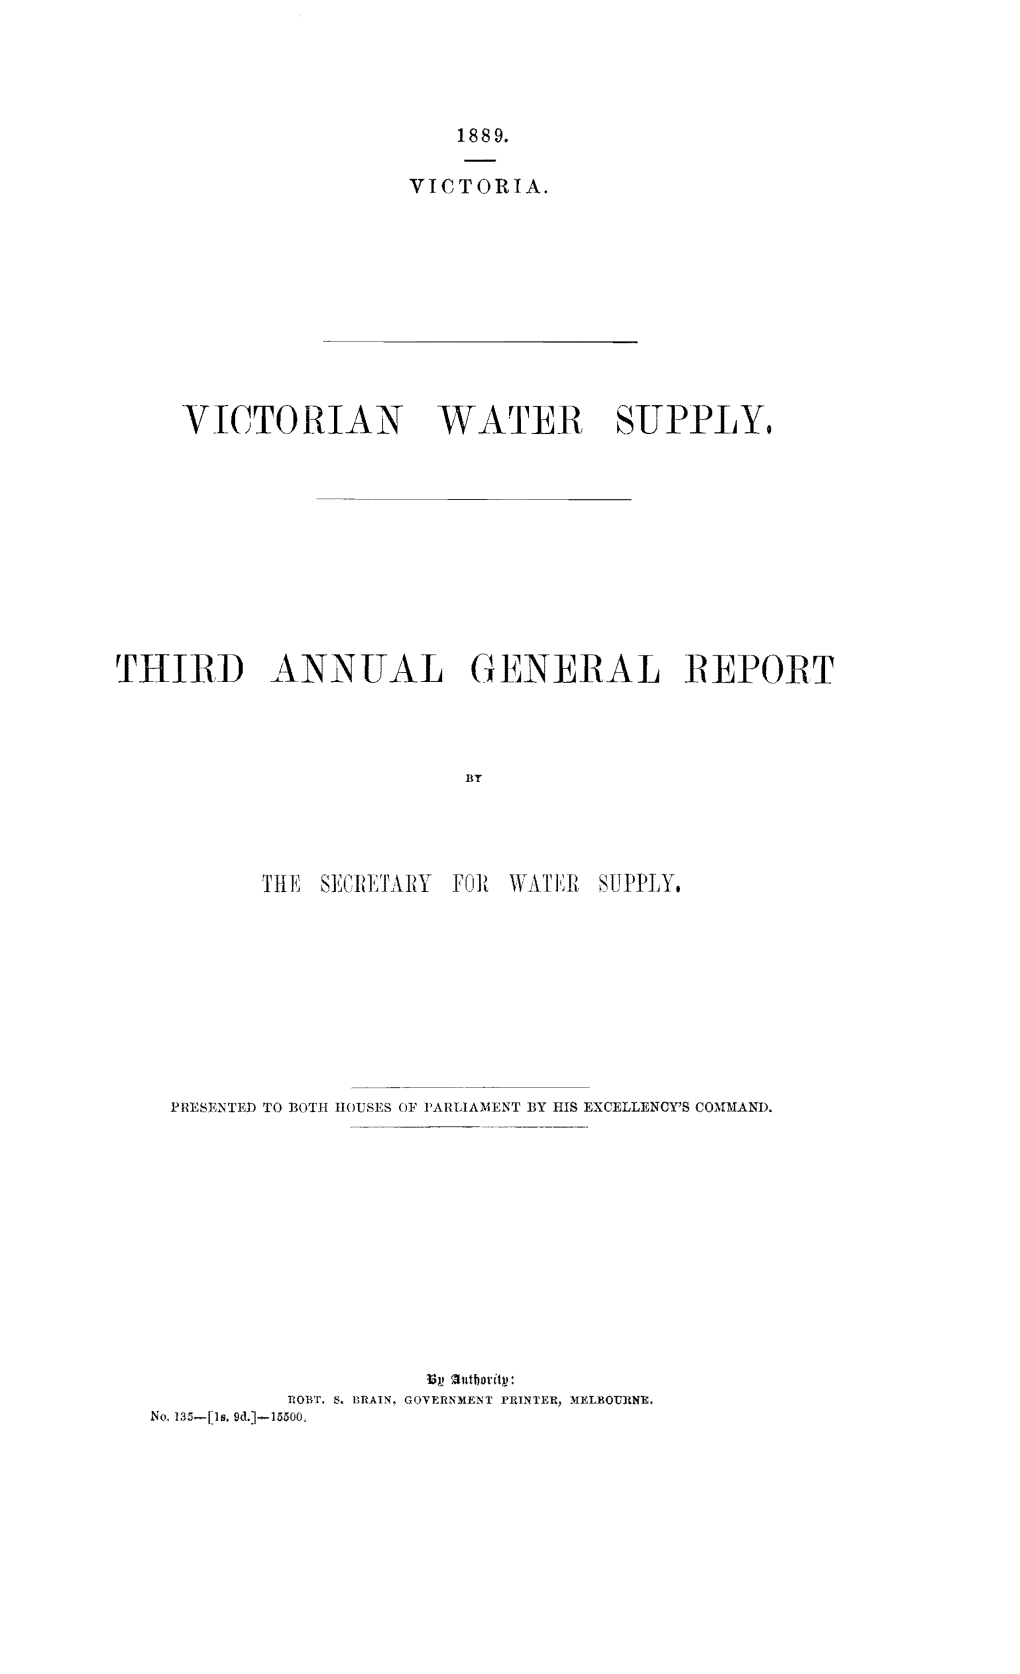 Victorian Water Supply